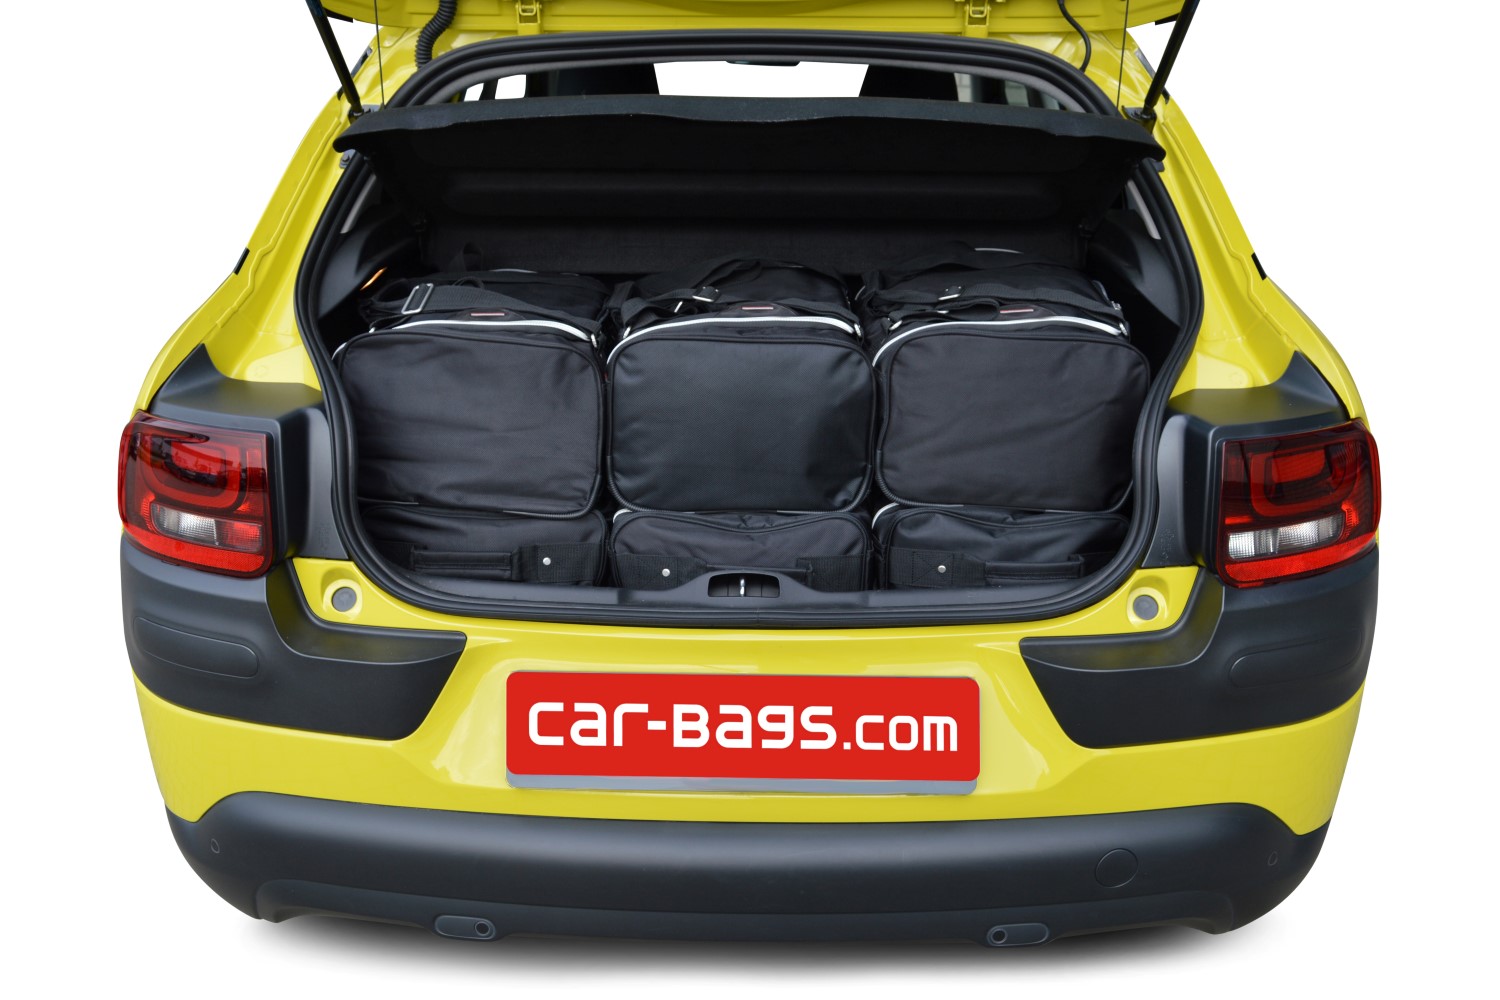 Citroen C4 Cactus Car Boot Tidy Storage Bag Organiser Luggage Compartment Travel 